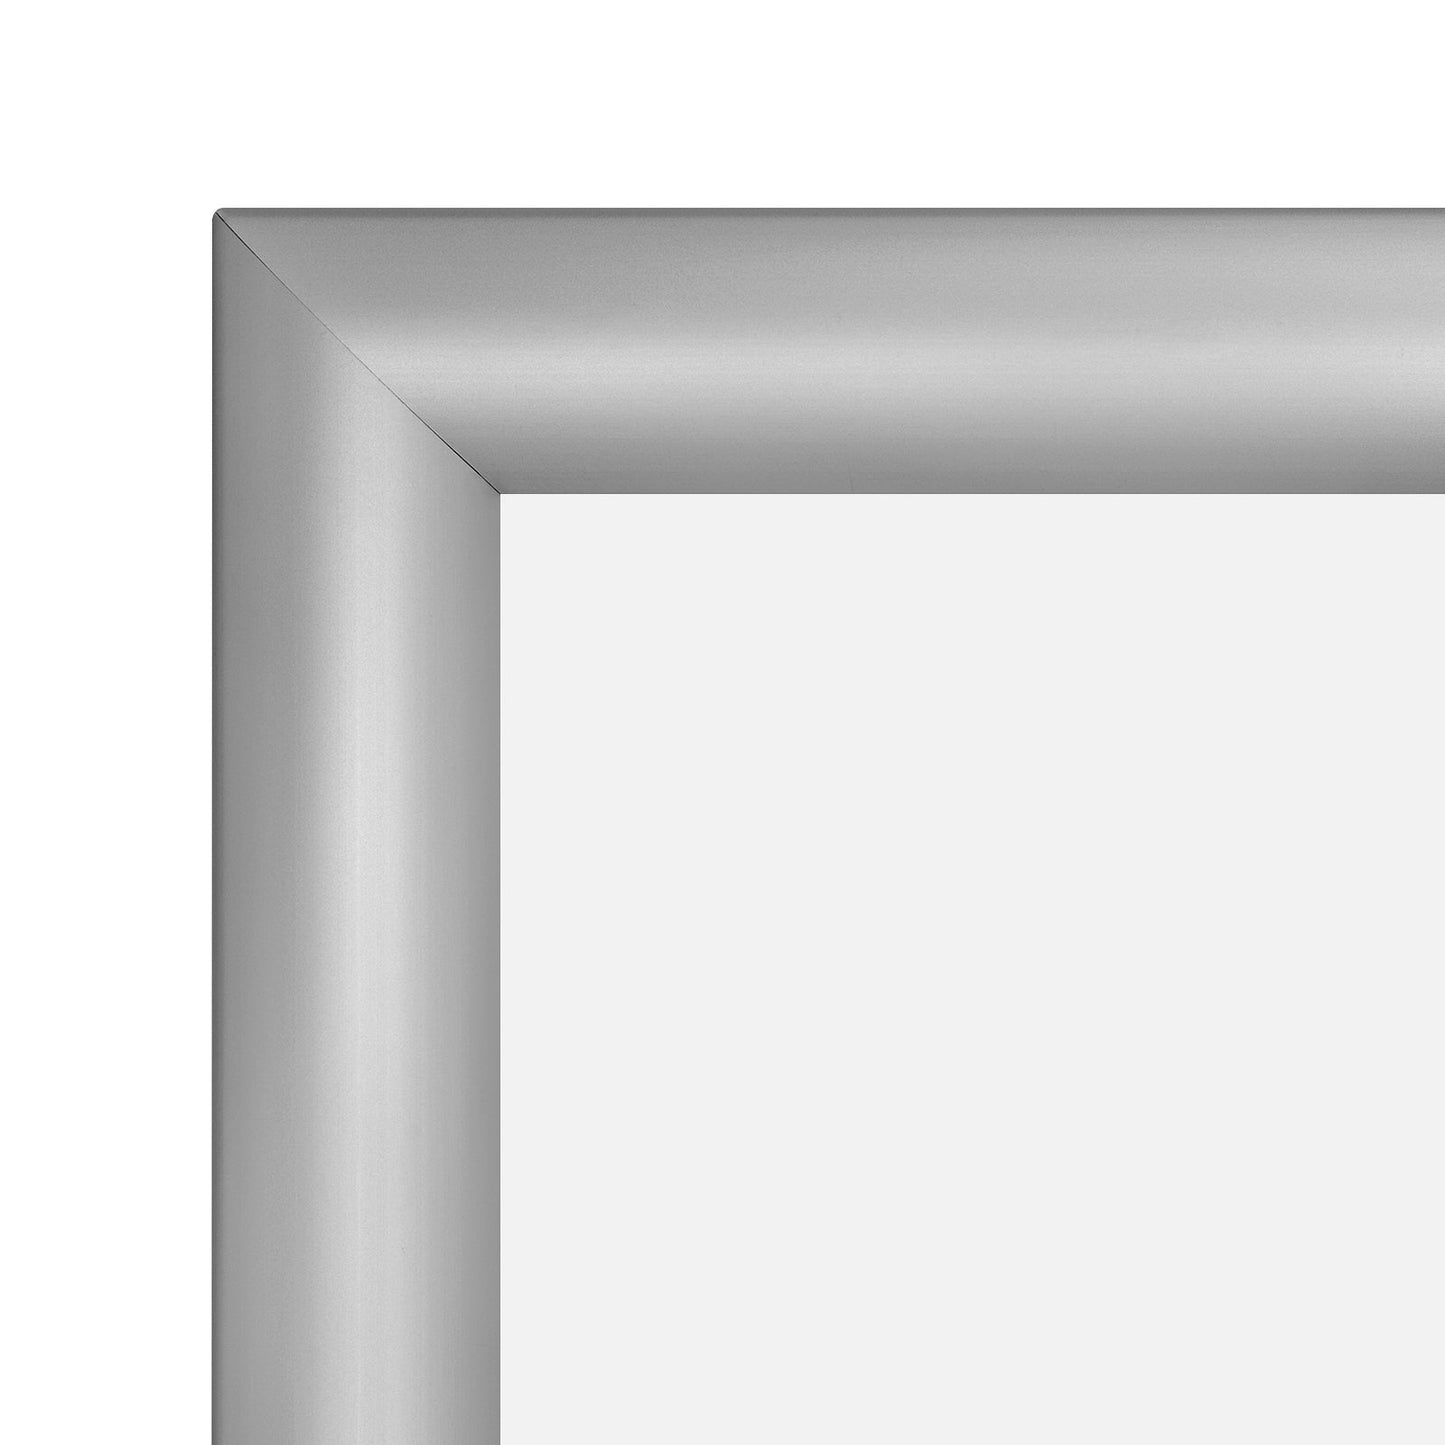 22x26 Silver SnapeZo® Snap Frame - 1.2" Profile - Snap Frames Direct